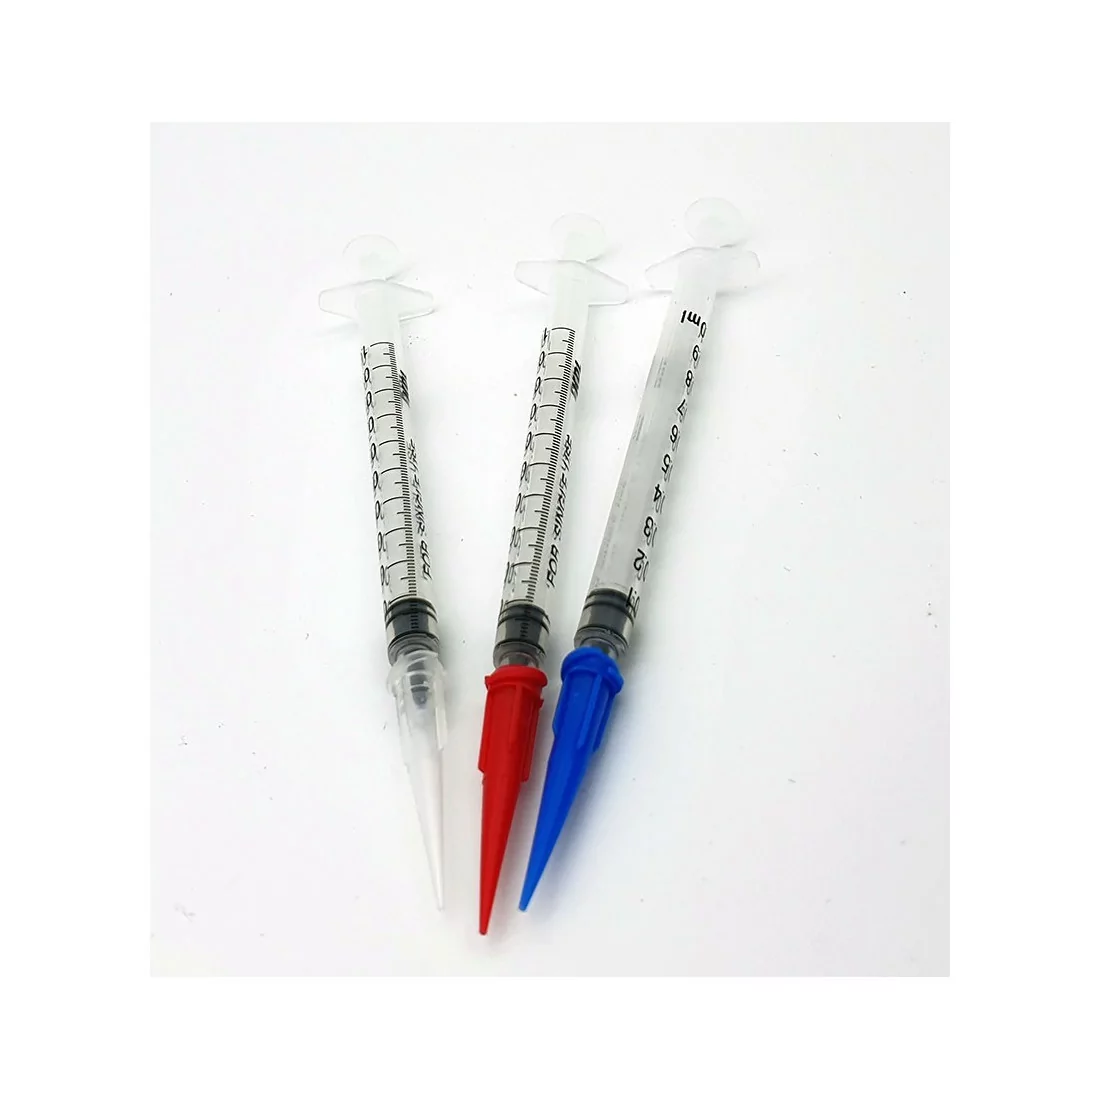 1ml precision syringe